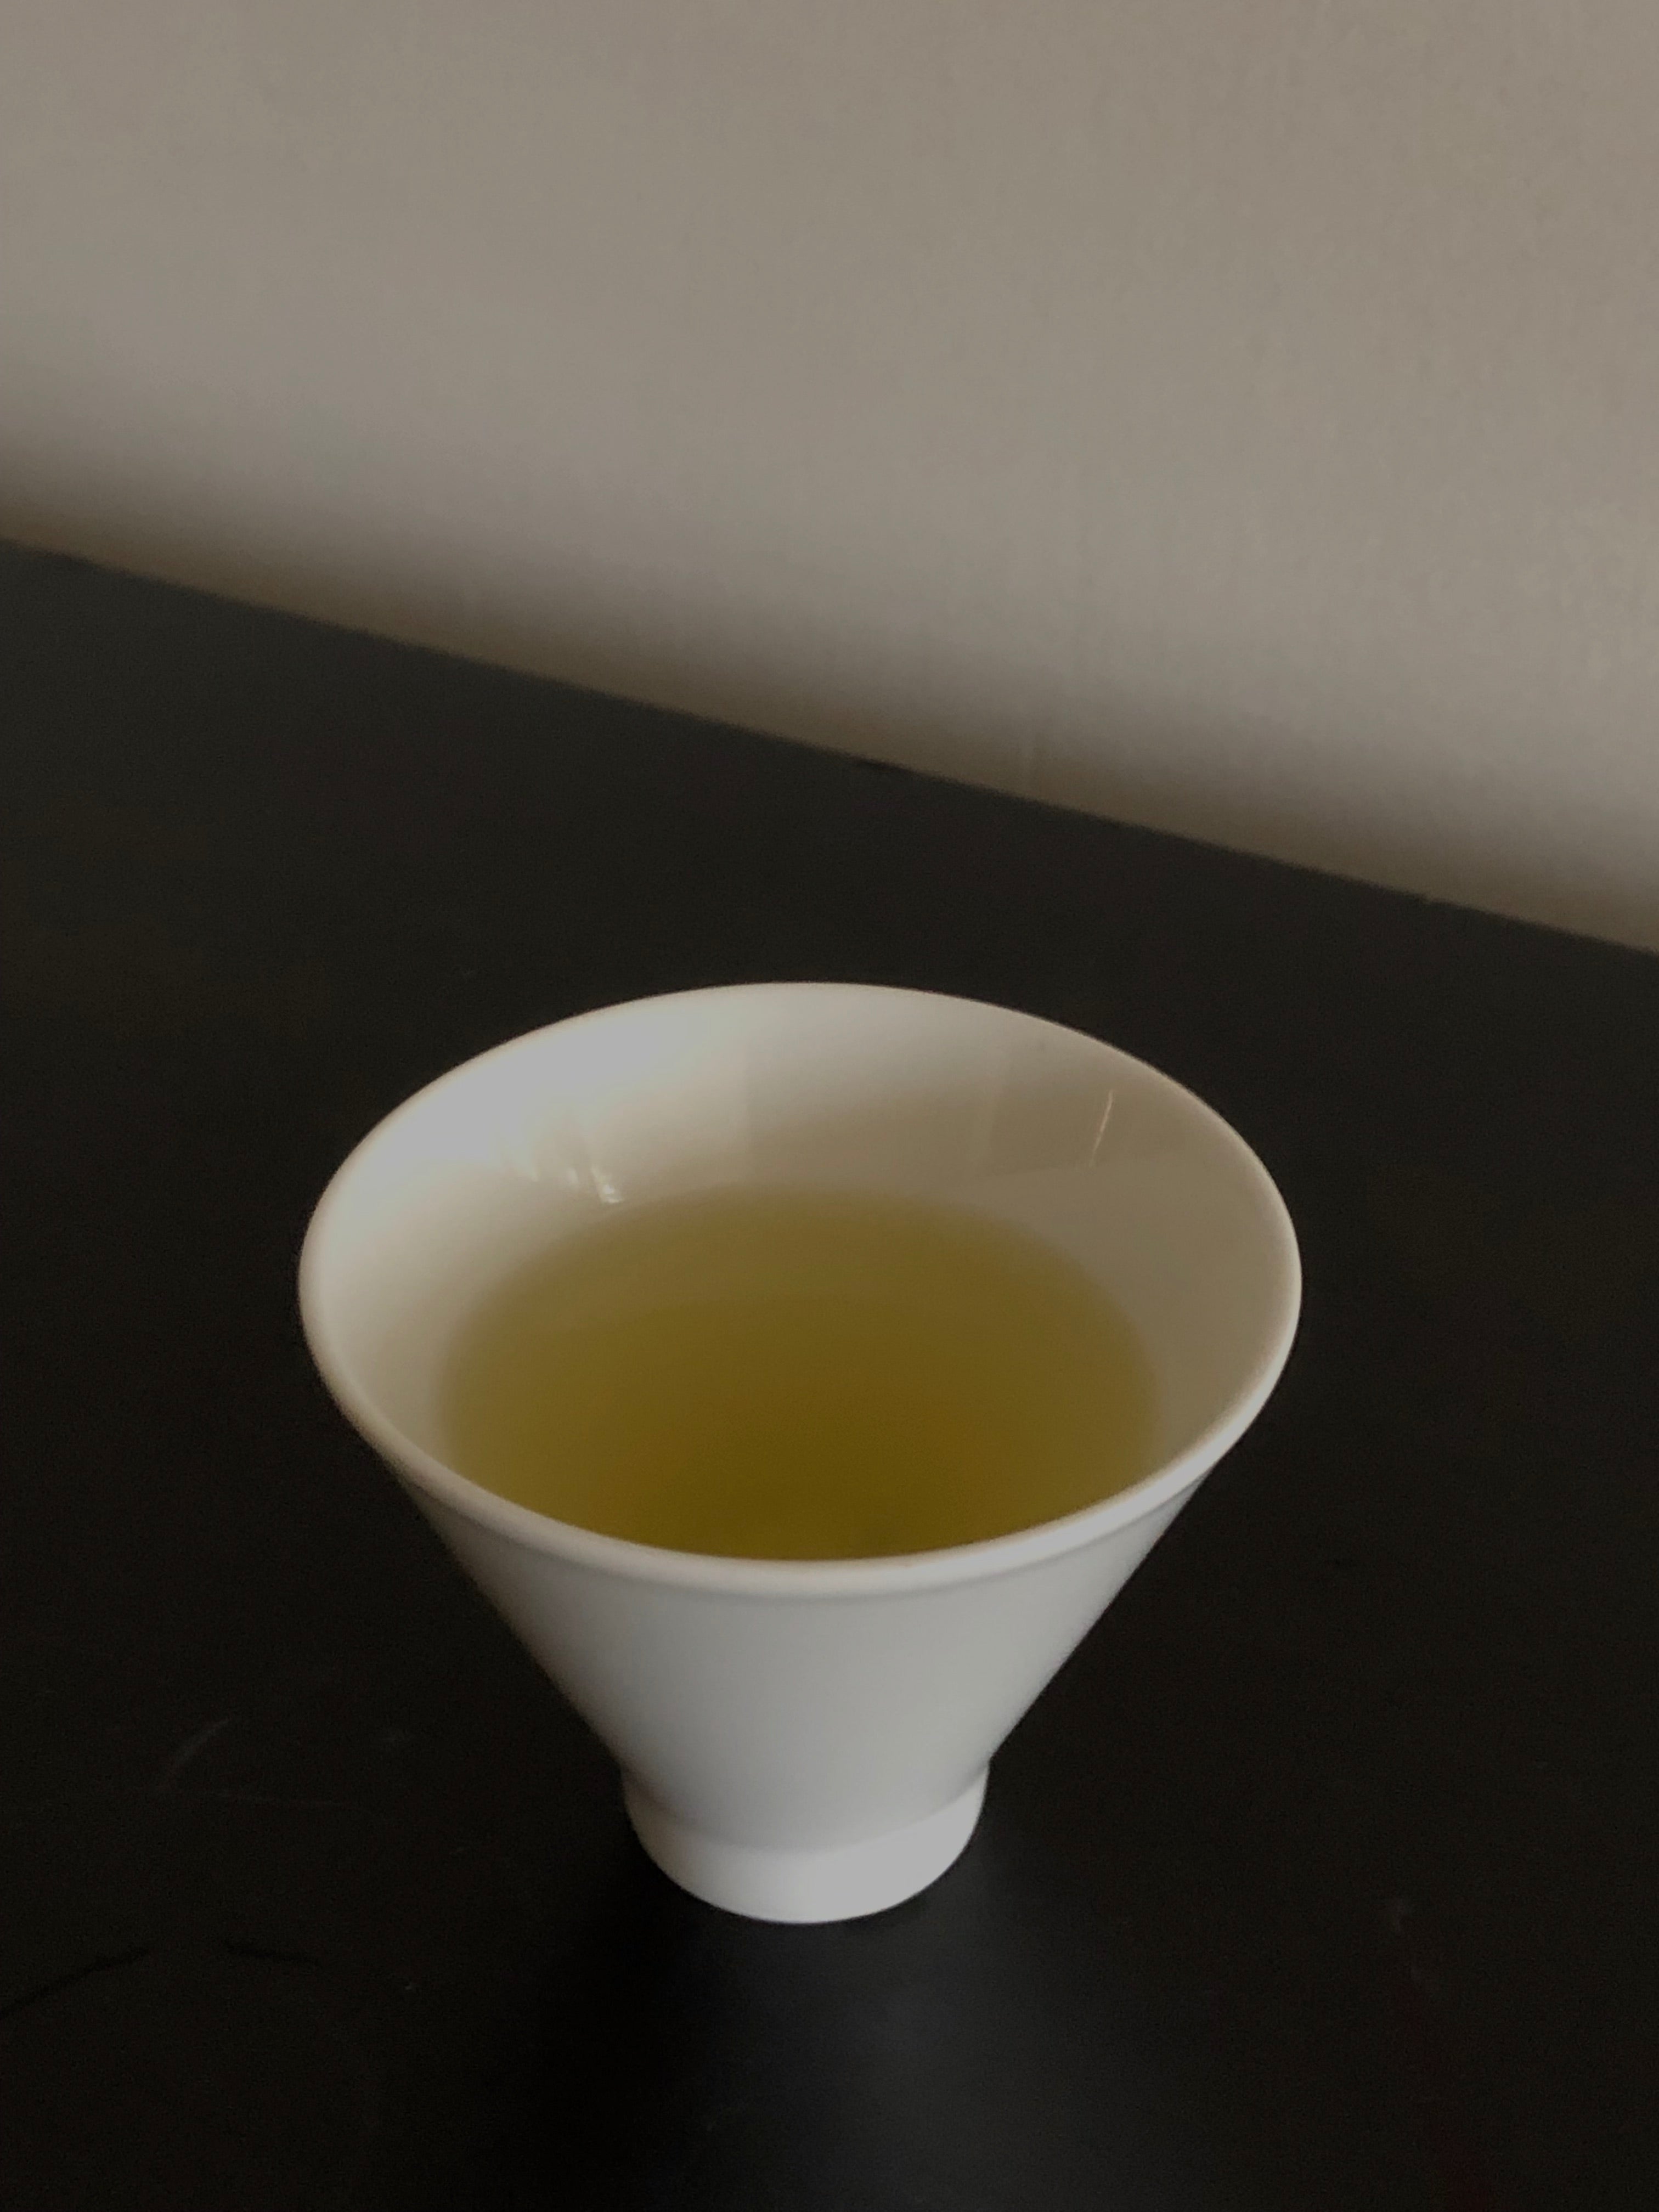 Saemidori sencha green tea loose leaf brew side view from Yame Fukuoka sold by Sabo Tea Australia - Chiyonoen